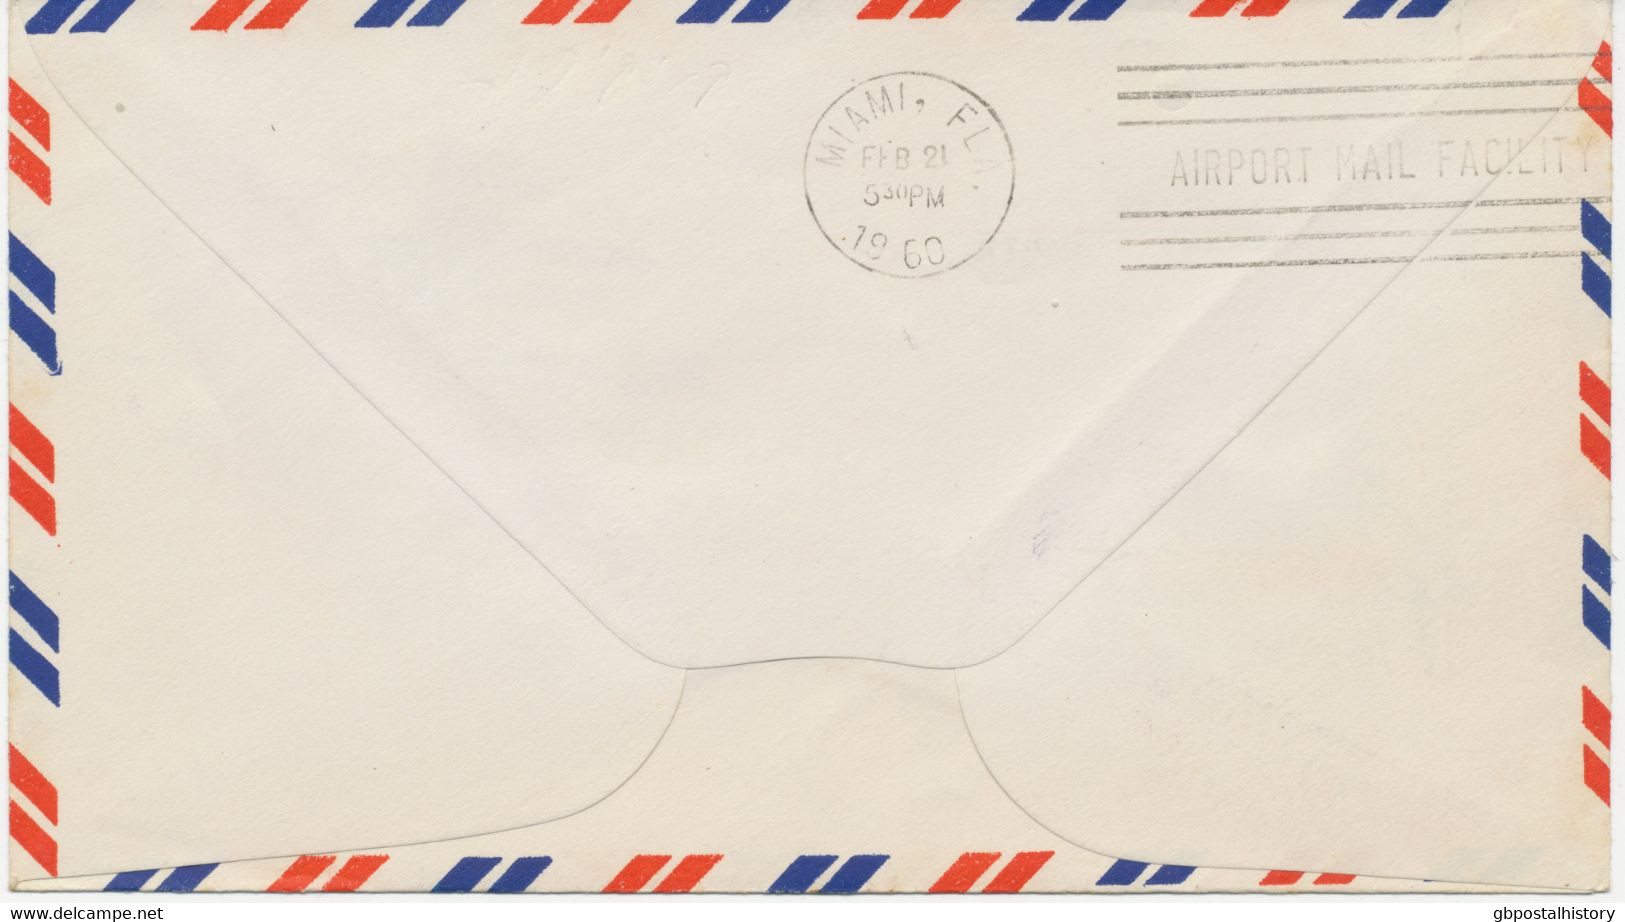 USA 1959 Kab.-Erstflug Der Eastern Air Lines DC-8B - First Jet Air Mail Service - "Chicago, Illinois - Miami, Florida" - 2c. 1941-1960 Lettres